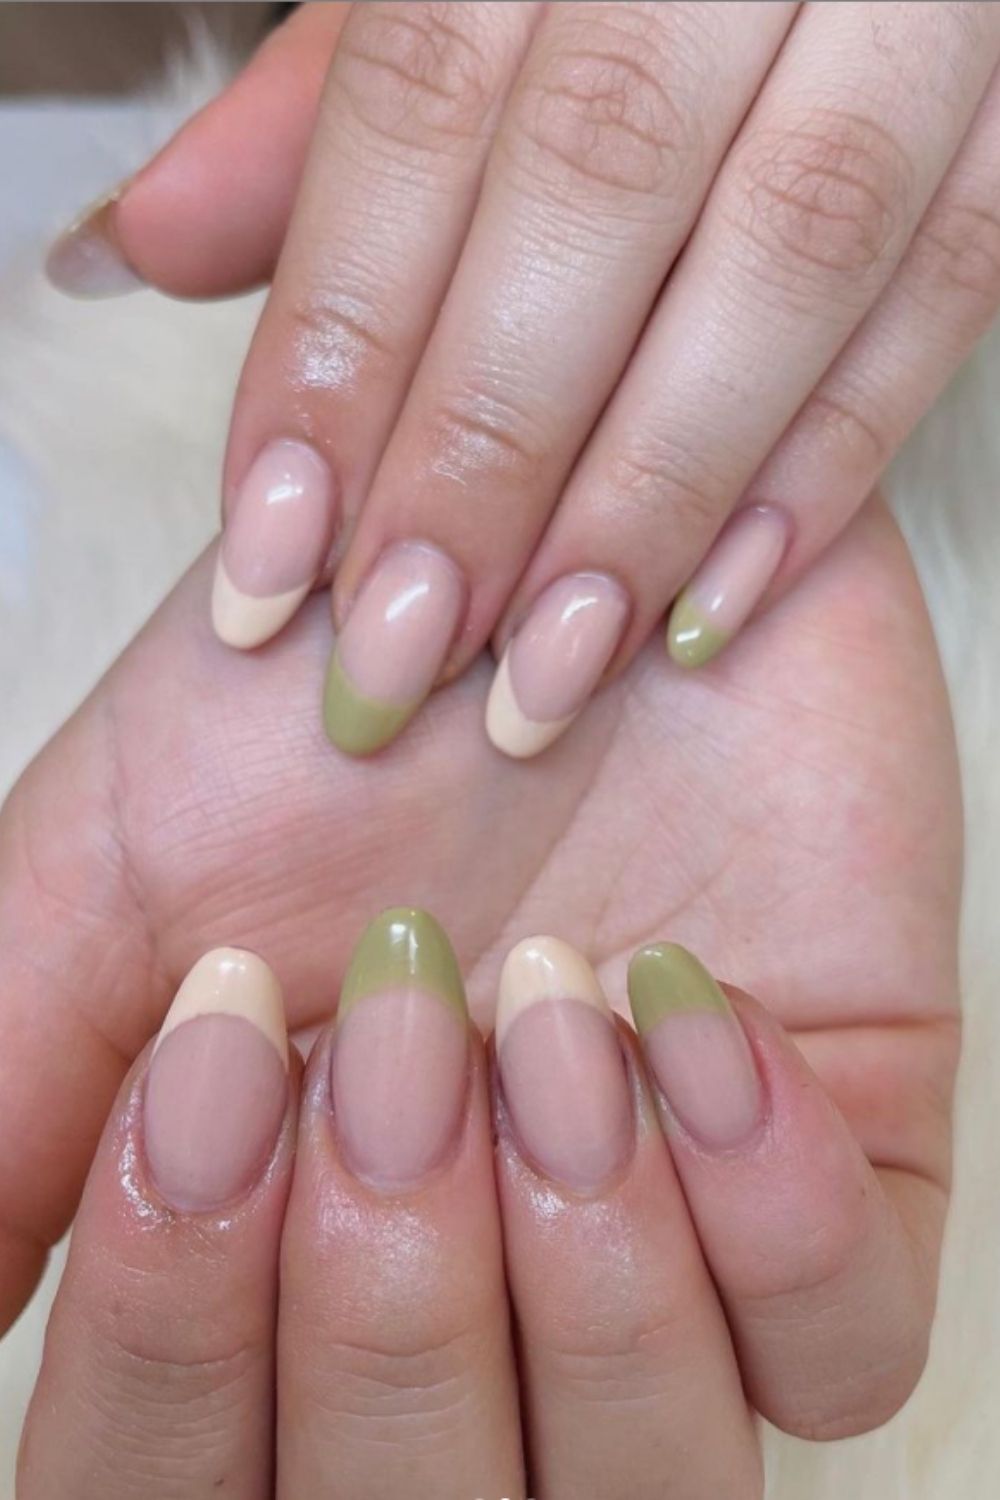 Green tip almond nails ideas